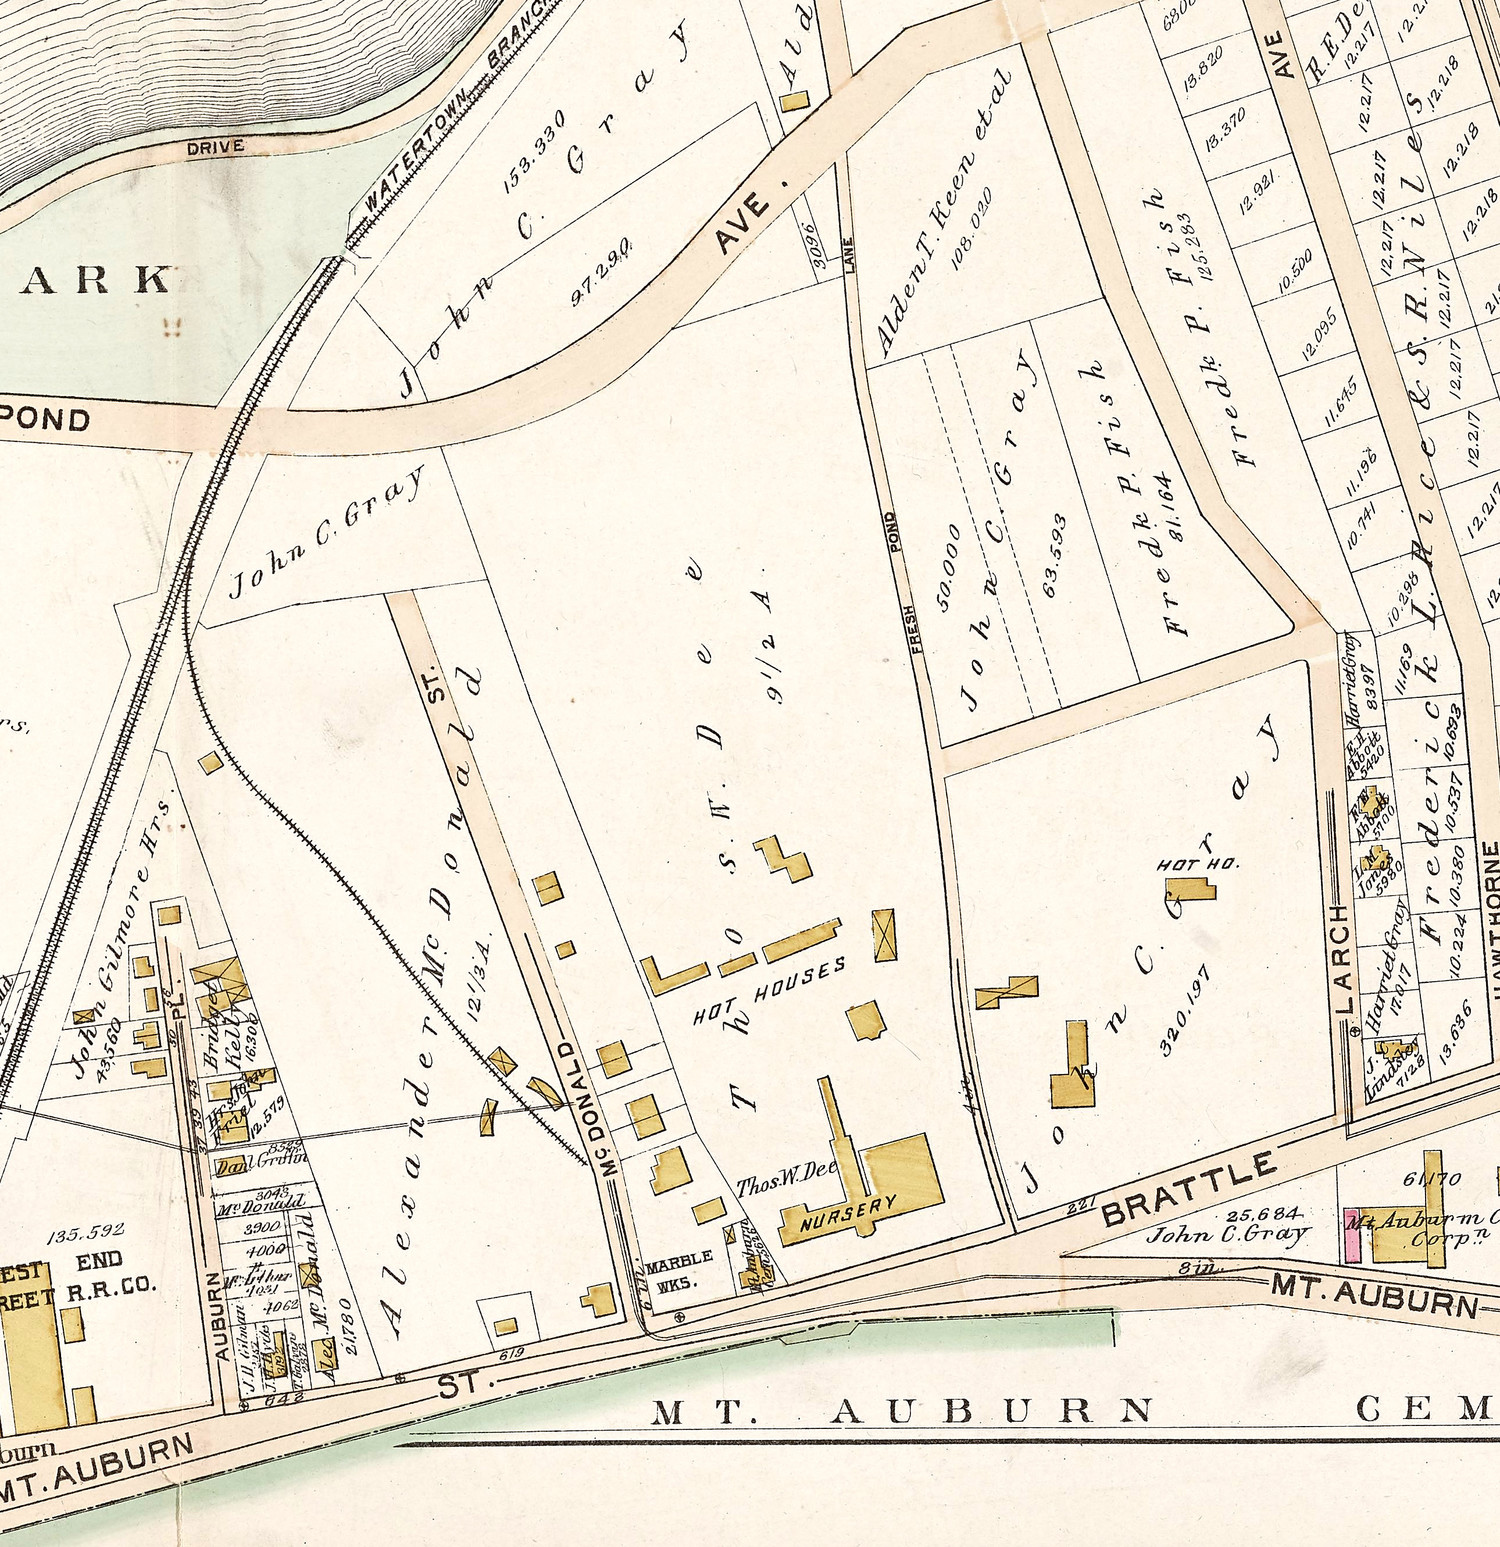 1894 Cambridge atlas showing McDonald Street and Fresh Pond Lane.